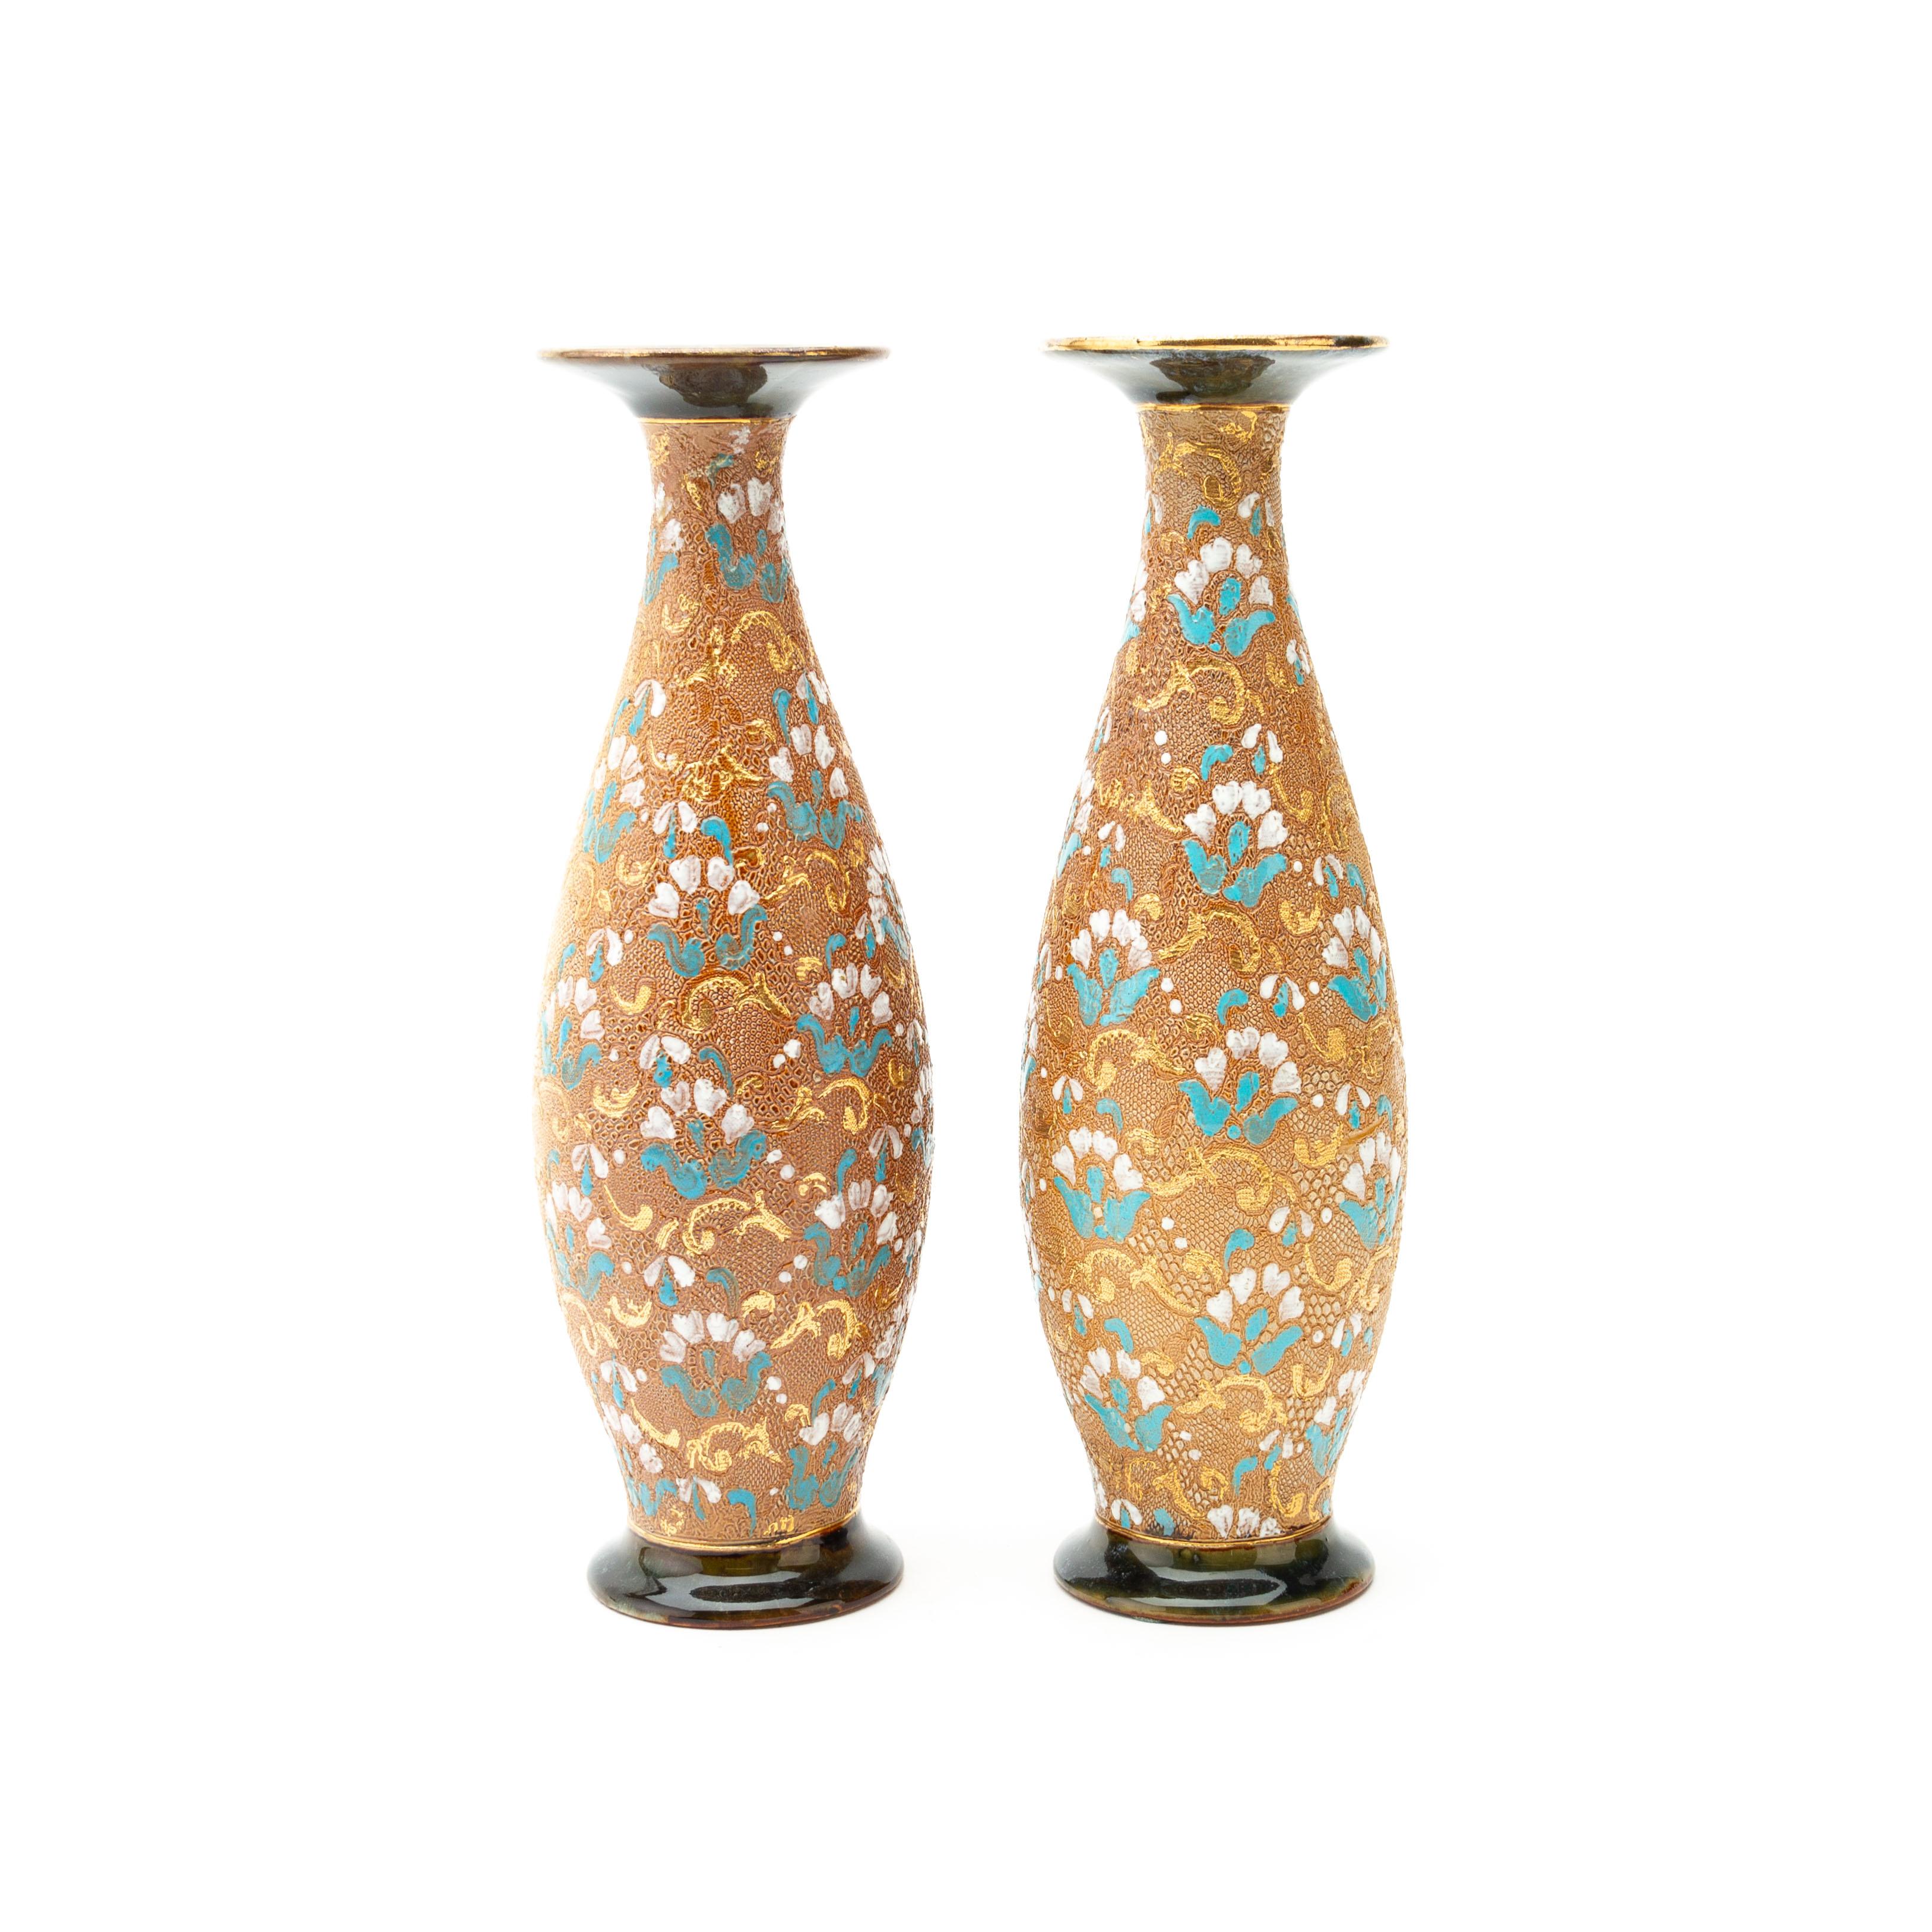 Pair of Doulton Lambeth Enamelled Stoneware Vases 19th Century
Good condition
Free international shipping.